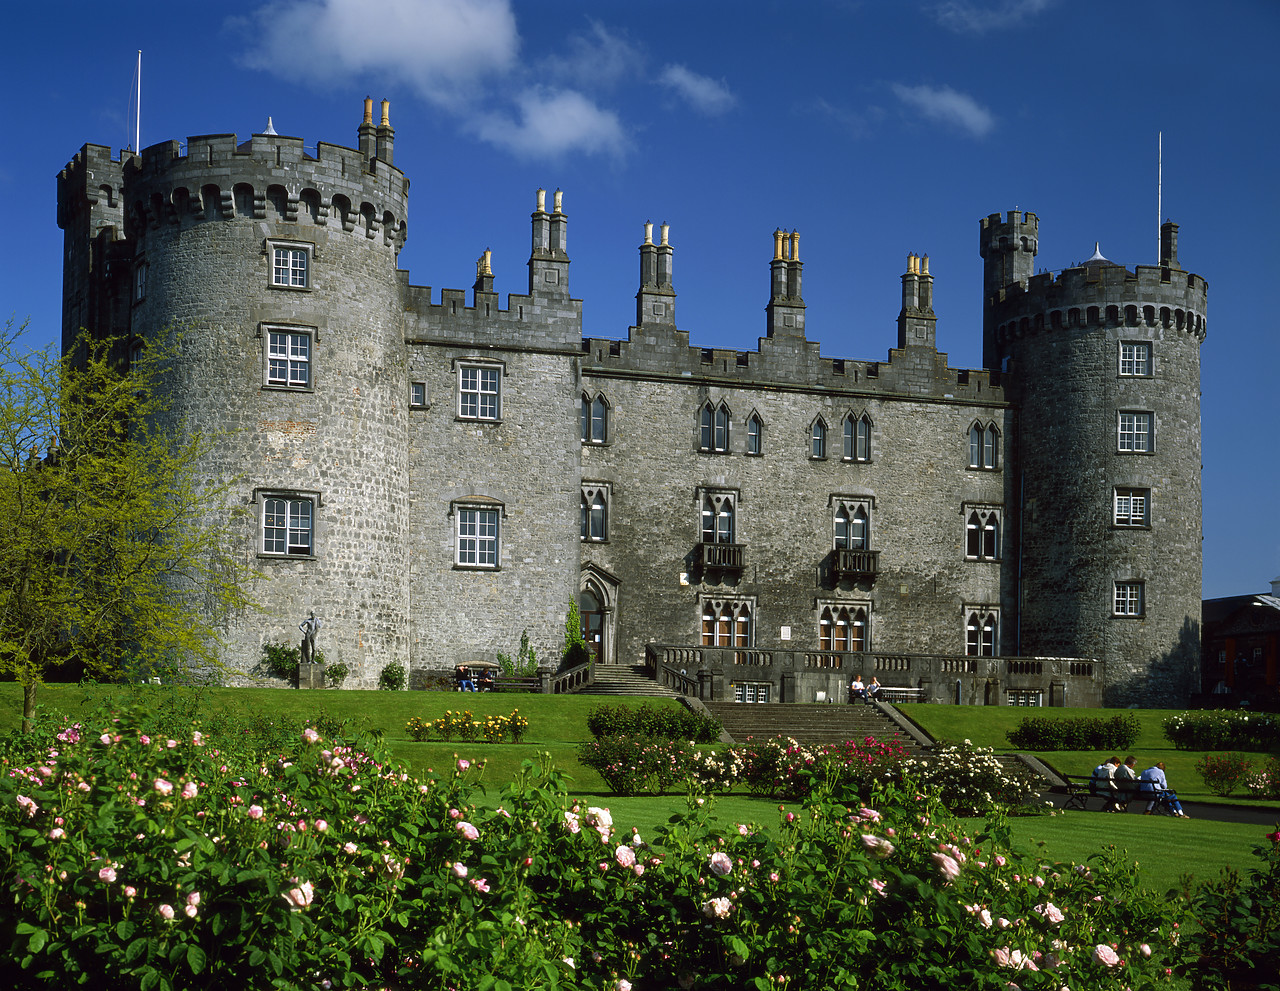 #030277-2 - Kilkenny Castle, Co. Kilkenny, Ireland